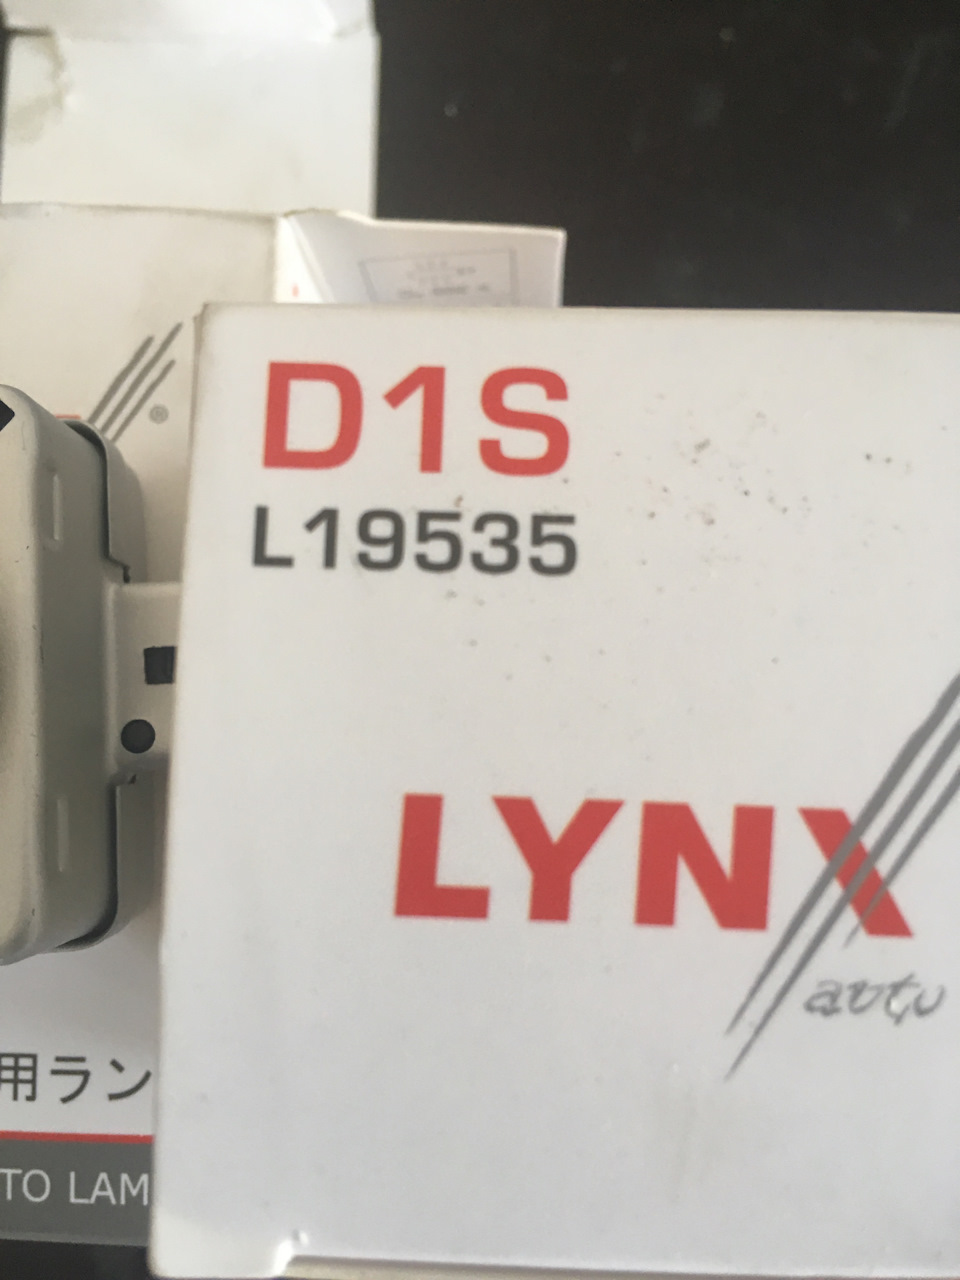 D1s лампа Линкс. Лампа d1s Lynx артикул. L19535 лампа газоразрядная Lynx гарантия. L19535.